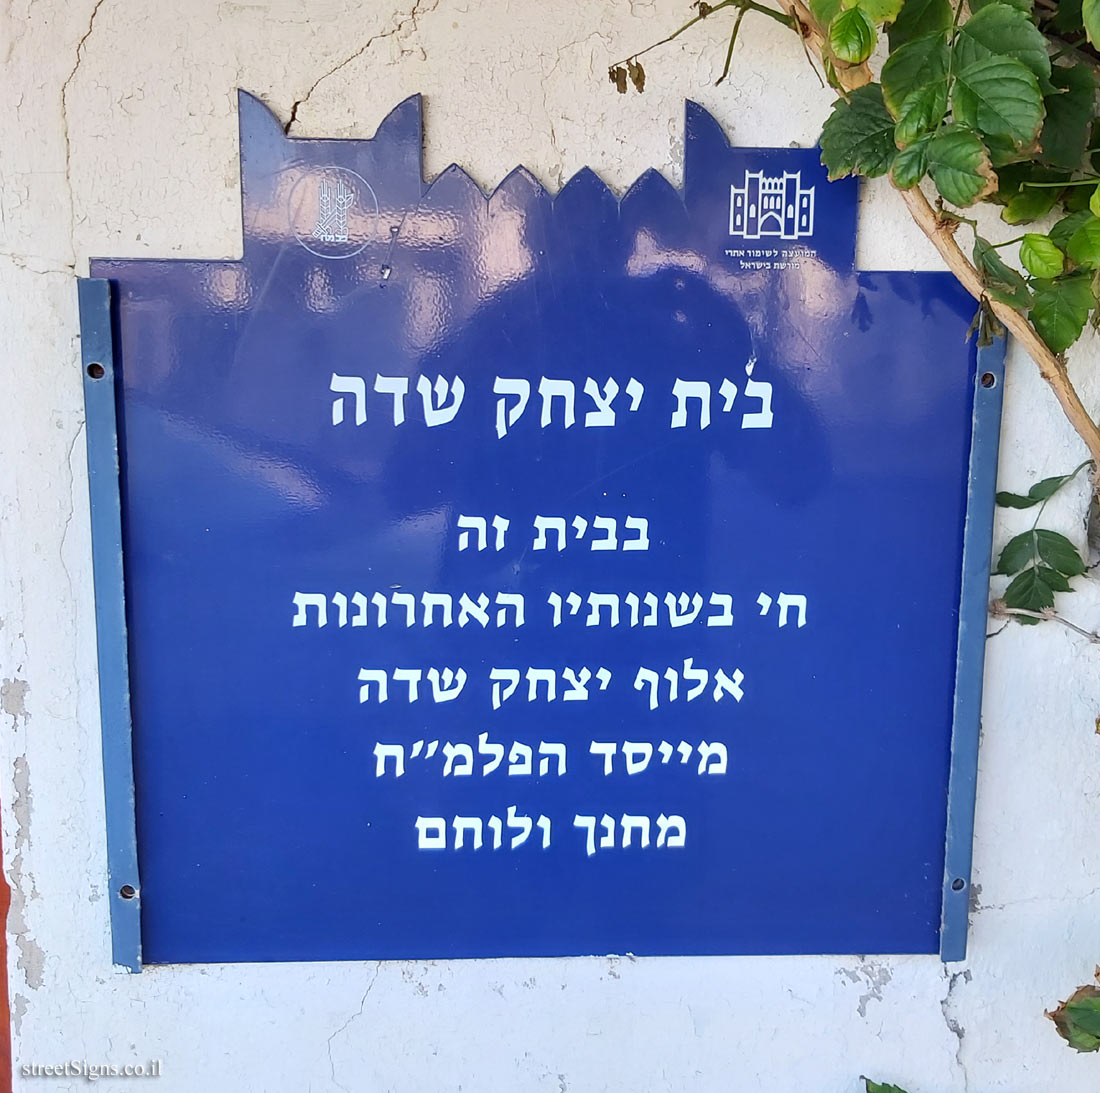 Tel Aviv - Heritage Sites in Israel - Yitzhak Sadeh’s House